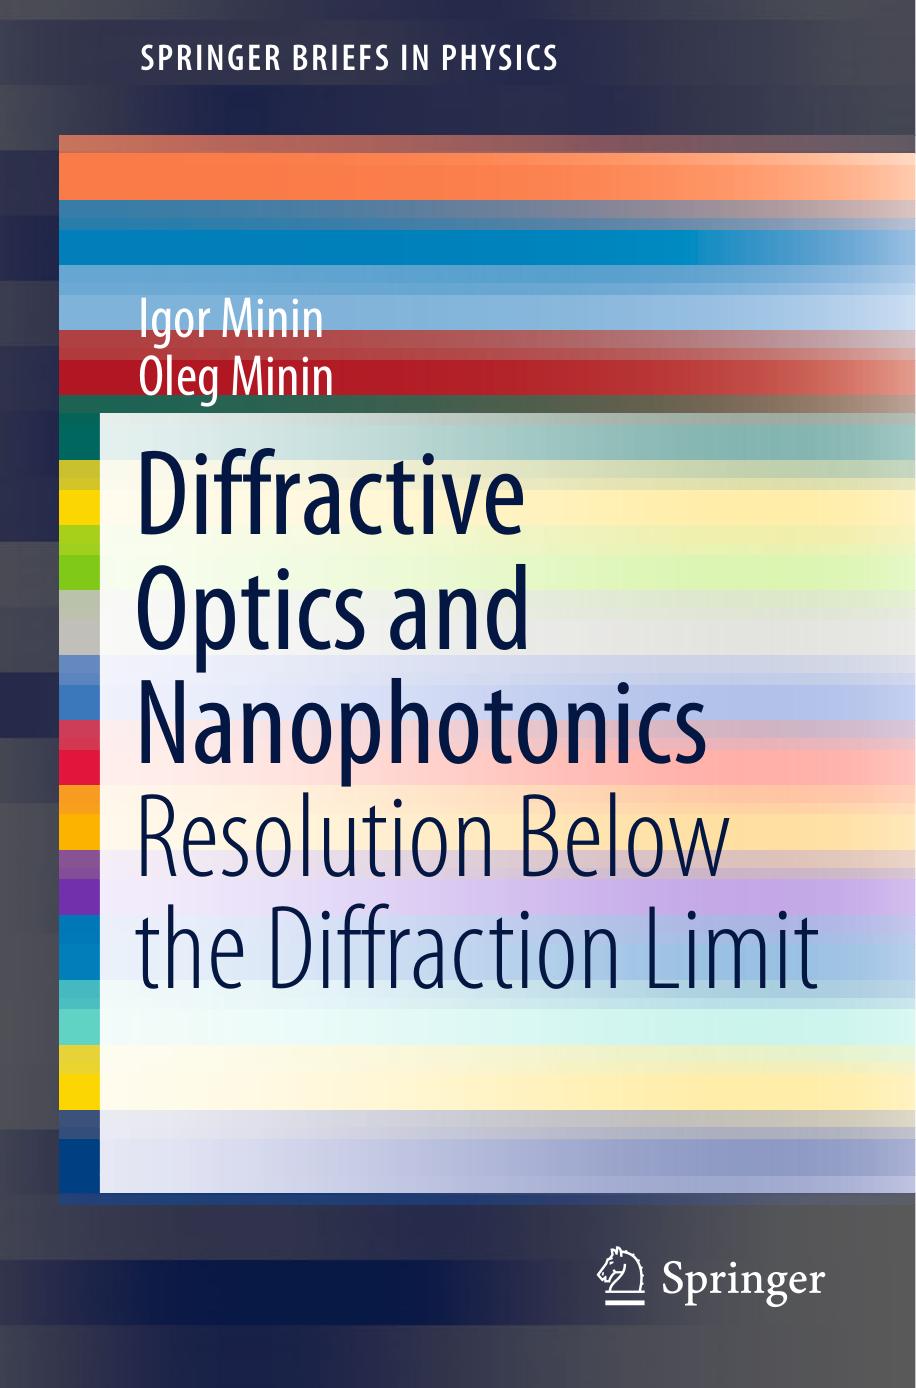 Diffractive Optics and Nanophotonics, 2016